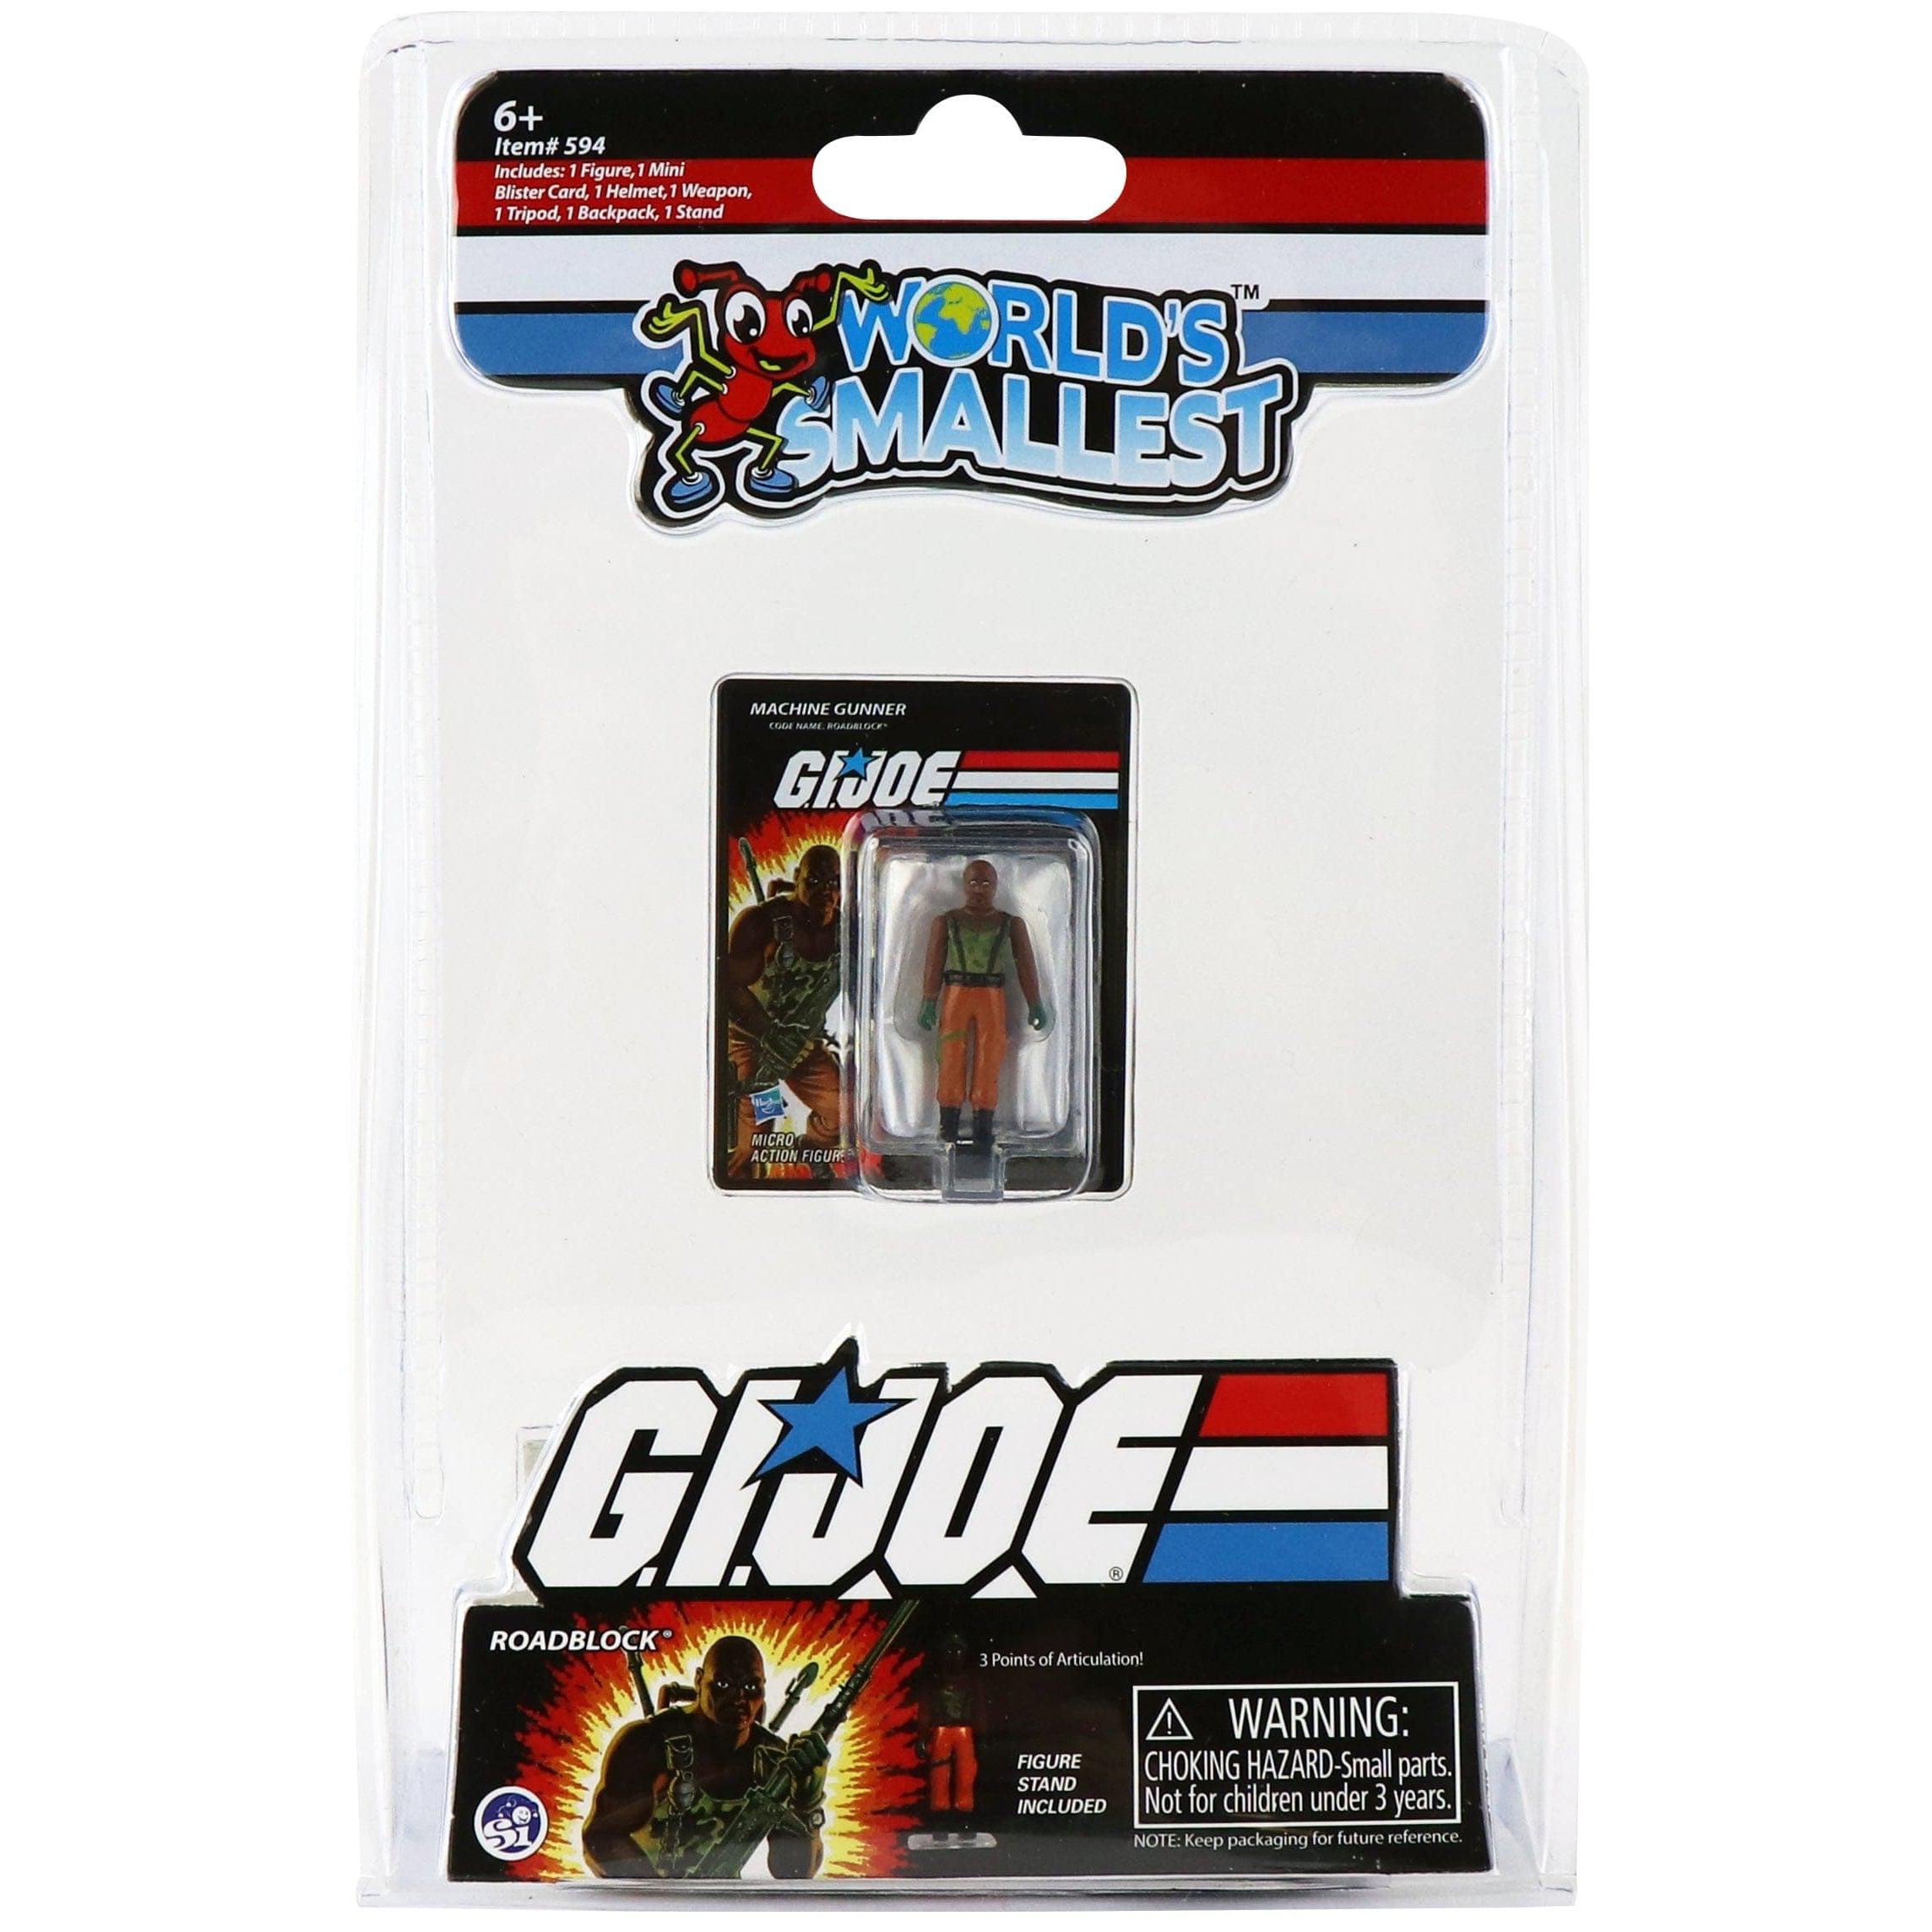 Super Impulse-World's Smallest GI Joe vs. Cobra-594-Legacy Toys